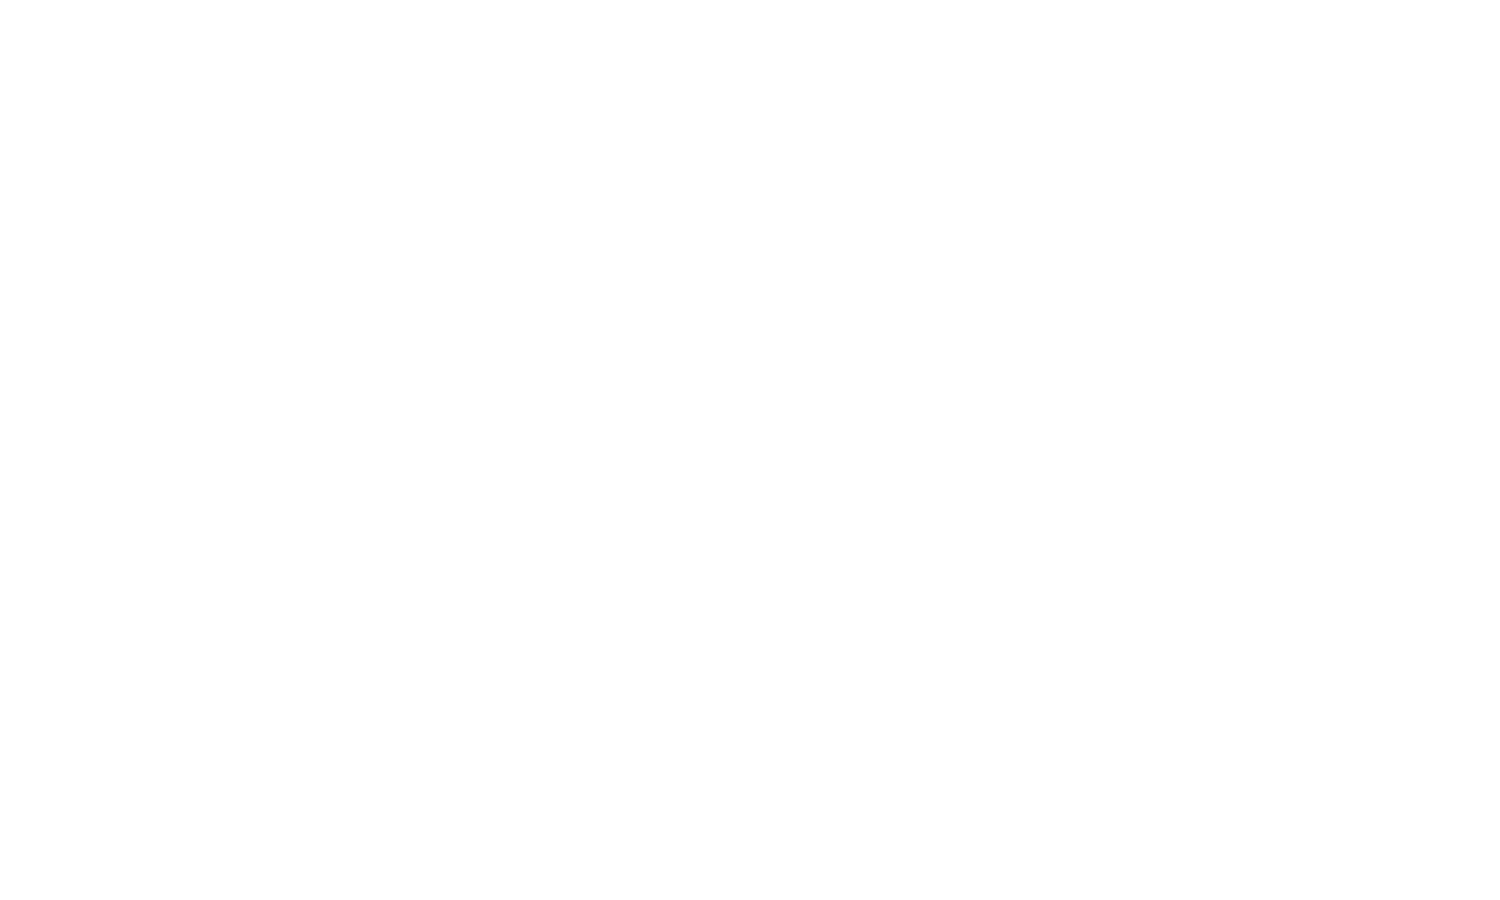 Crossing Threshold